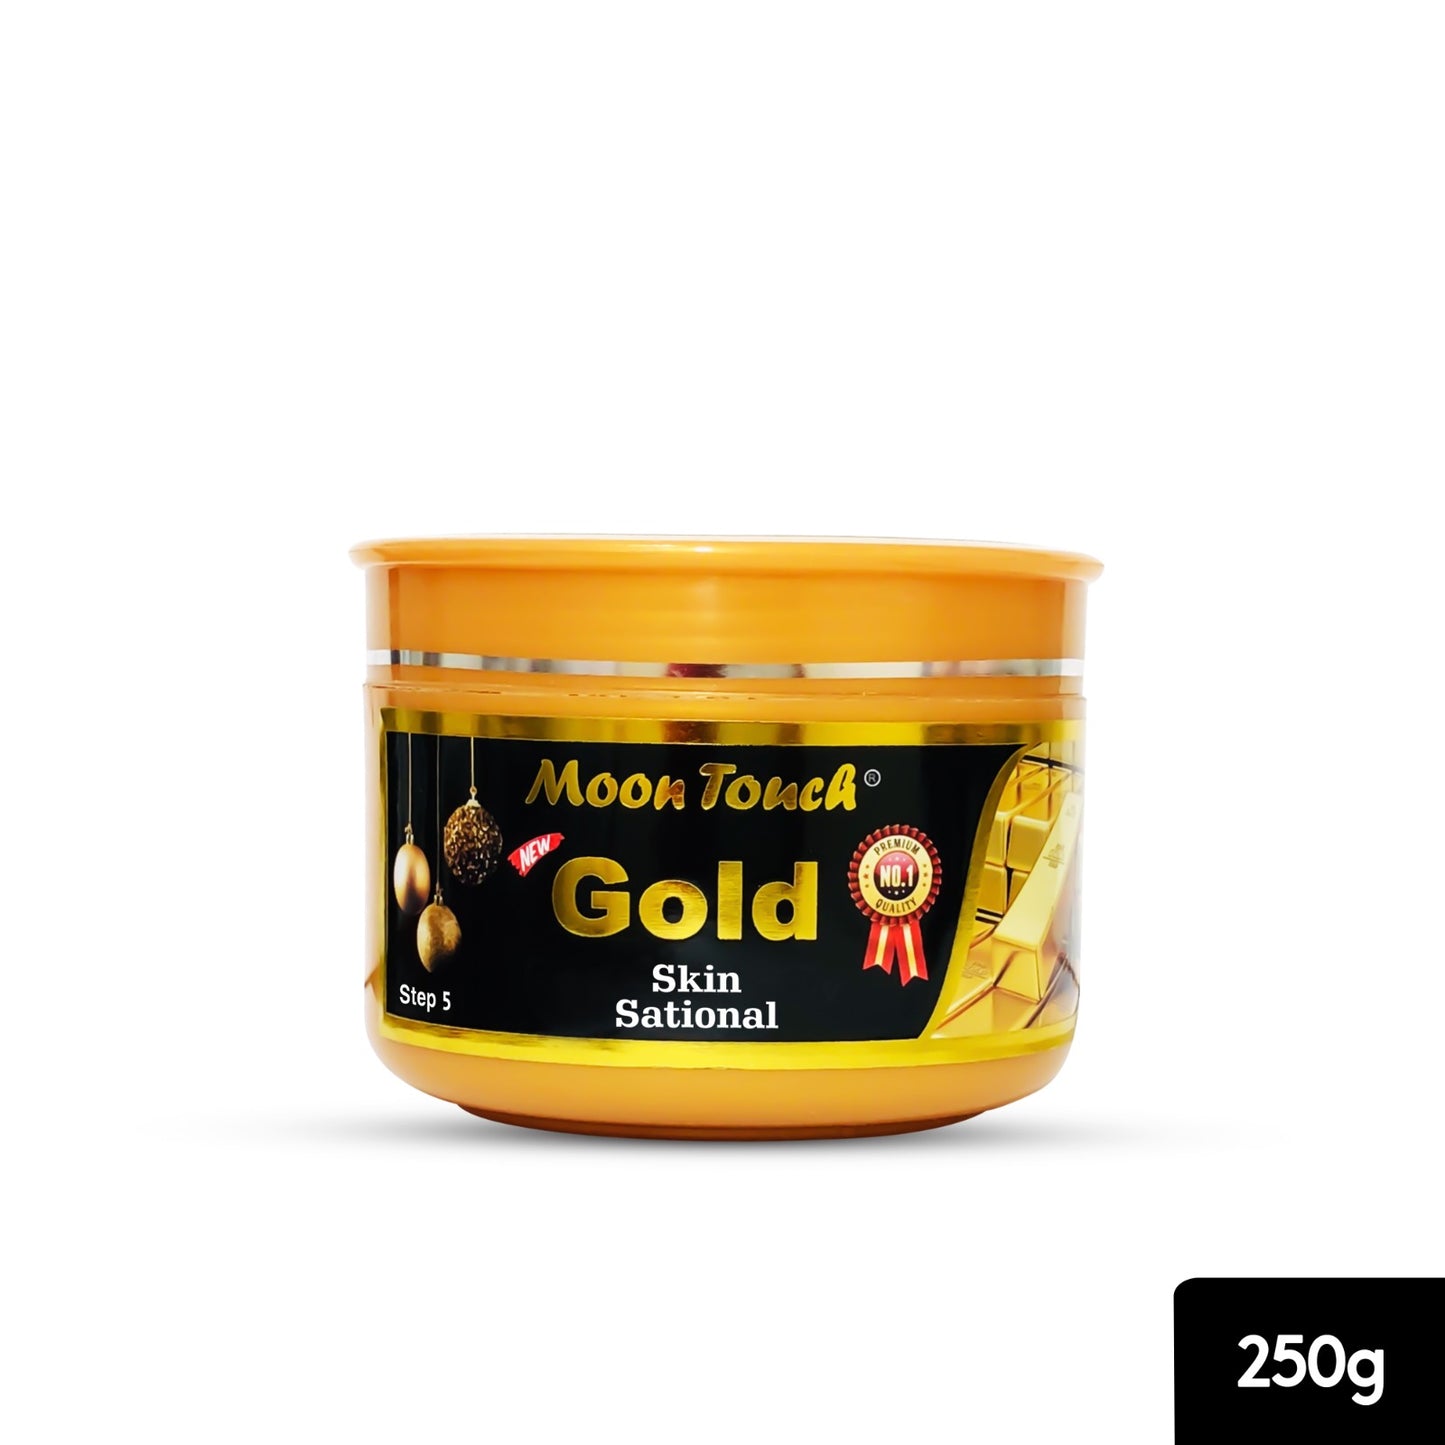 Gold Skin Sational 250g